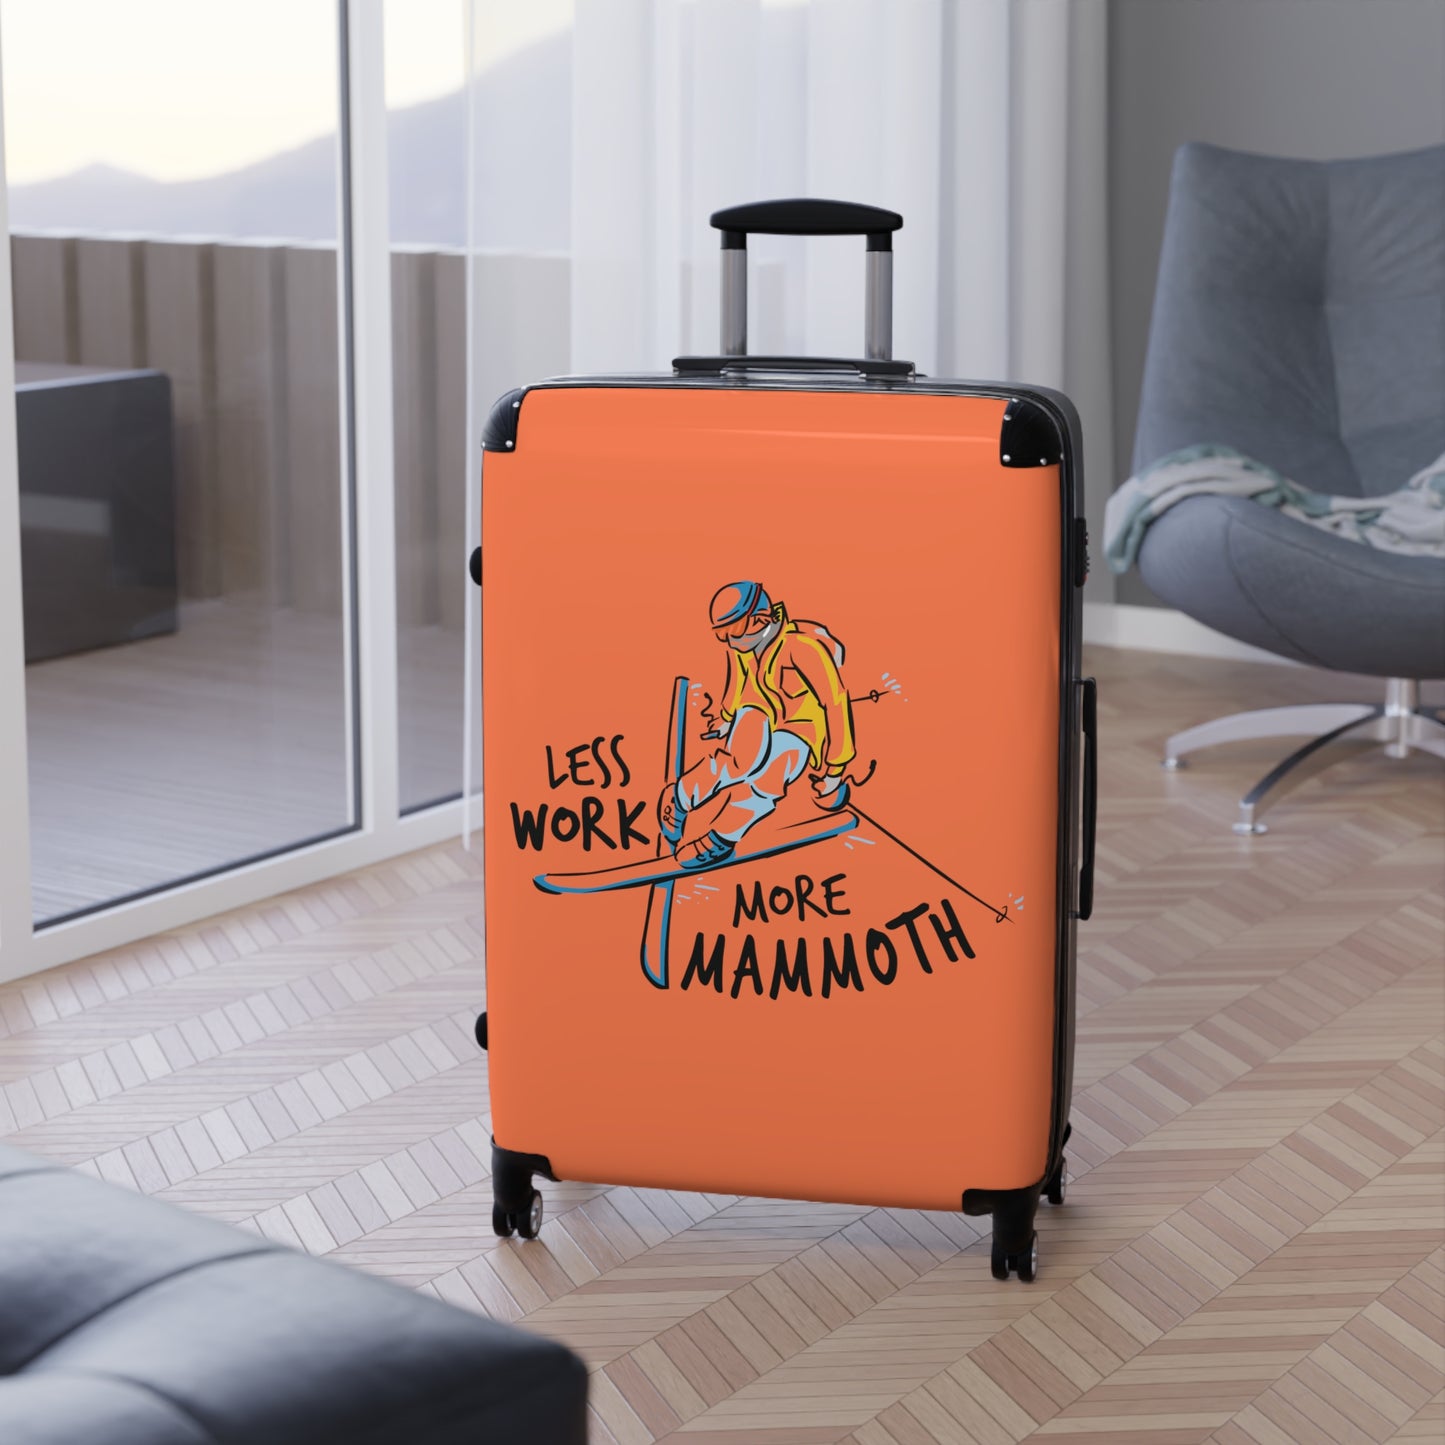 Less Work More Mammoth Custom Luggage